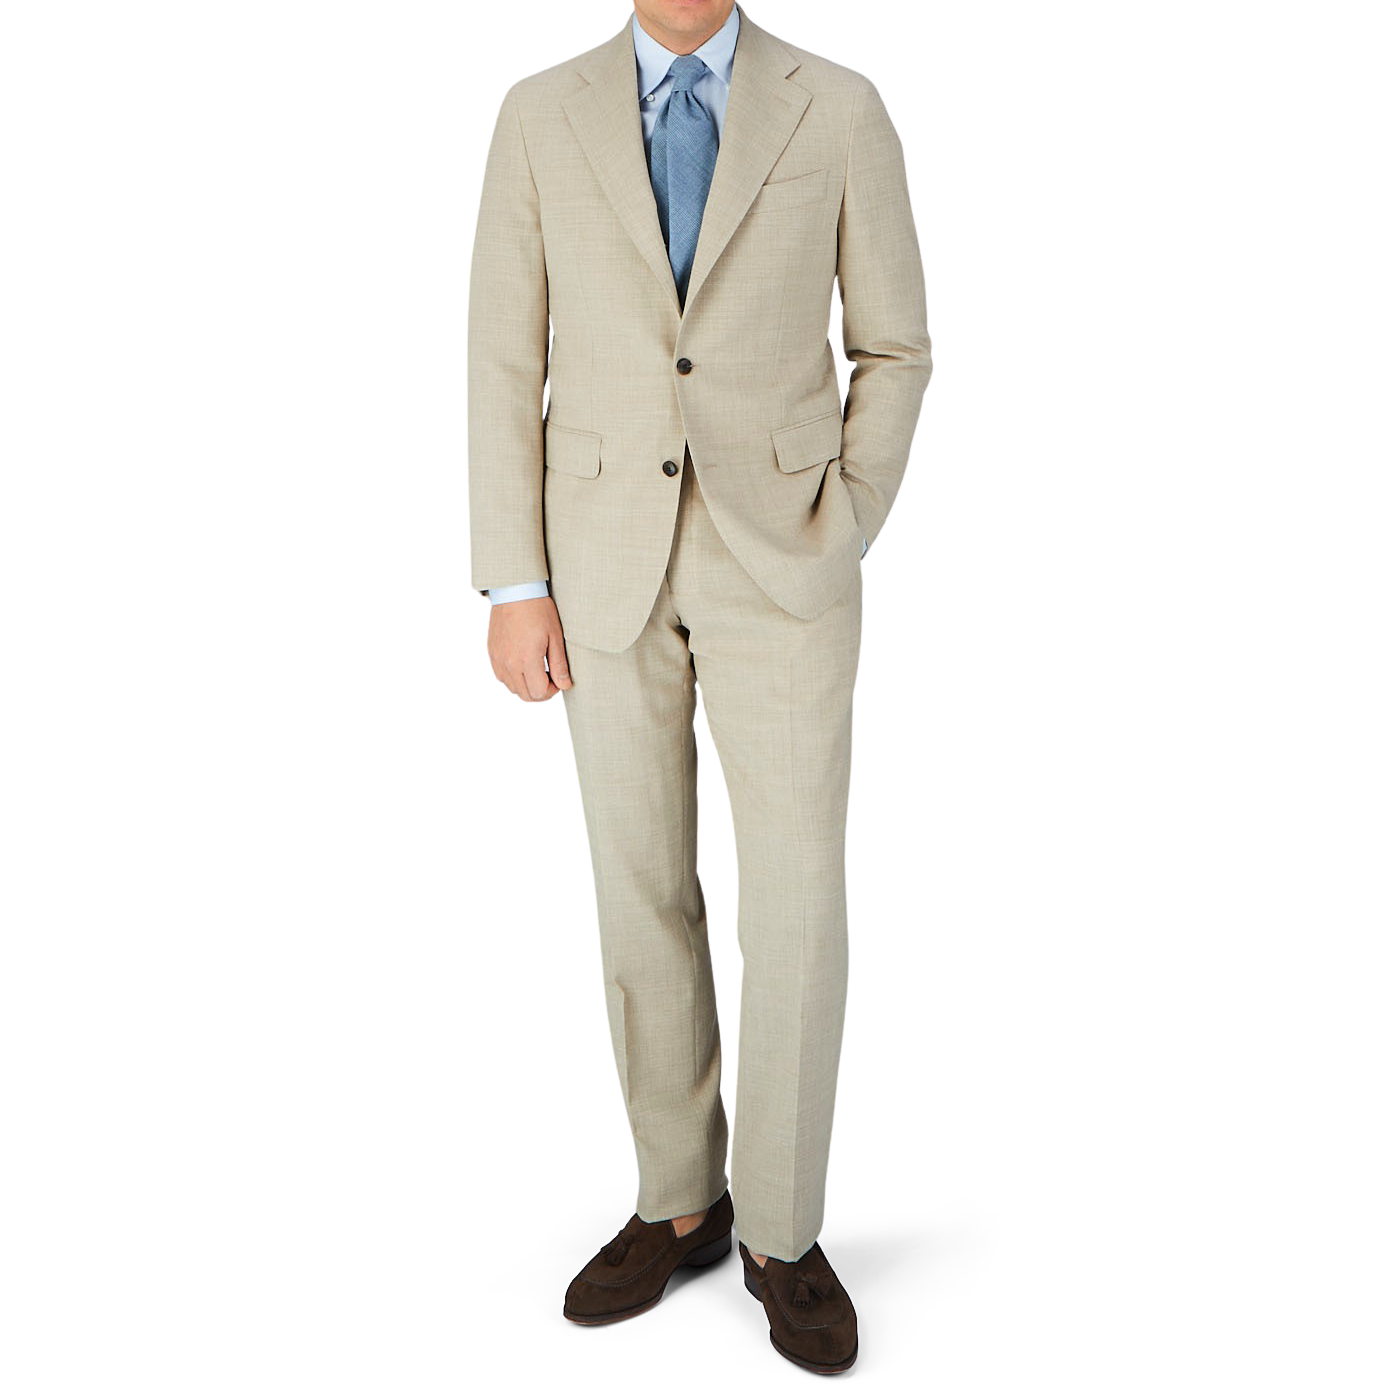 A man in a Beige Melange Wool Linen Suit Jacket and blue tie, made from a wool-linen blend by Baltzar Sartorial.